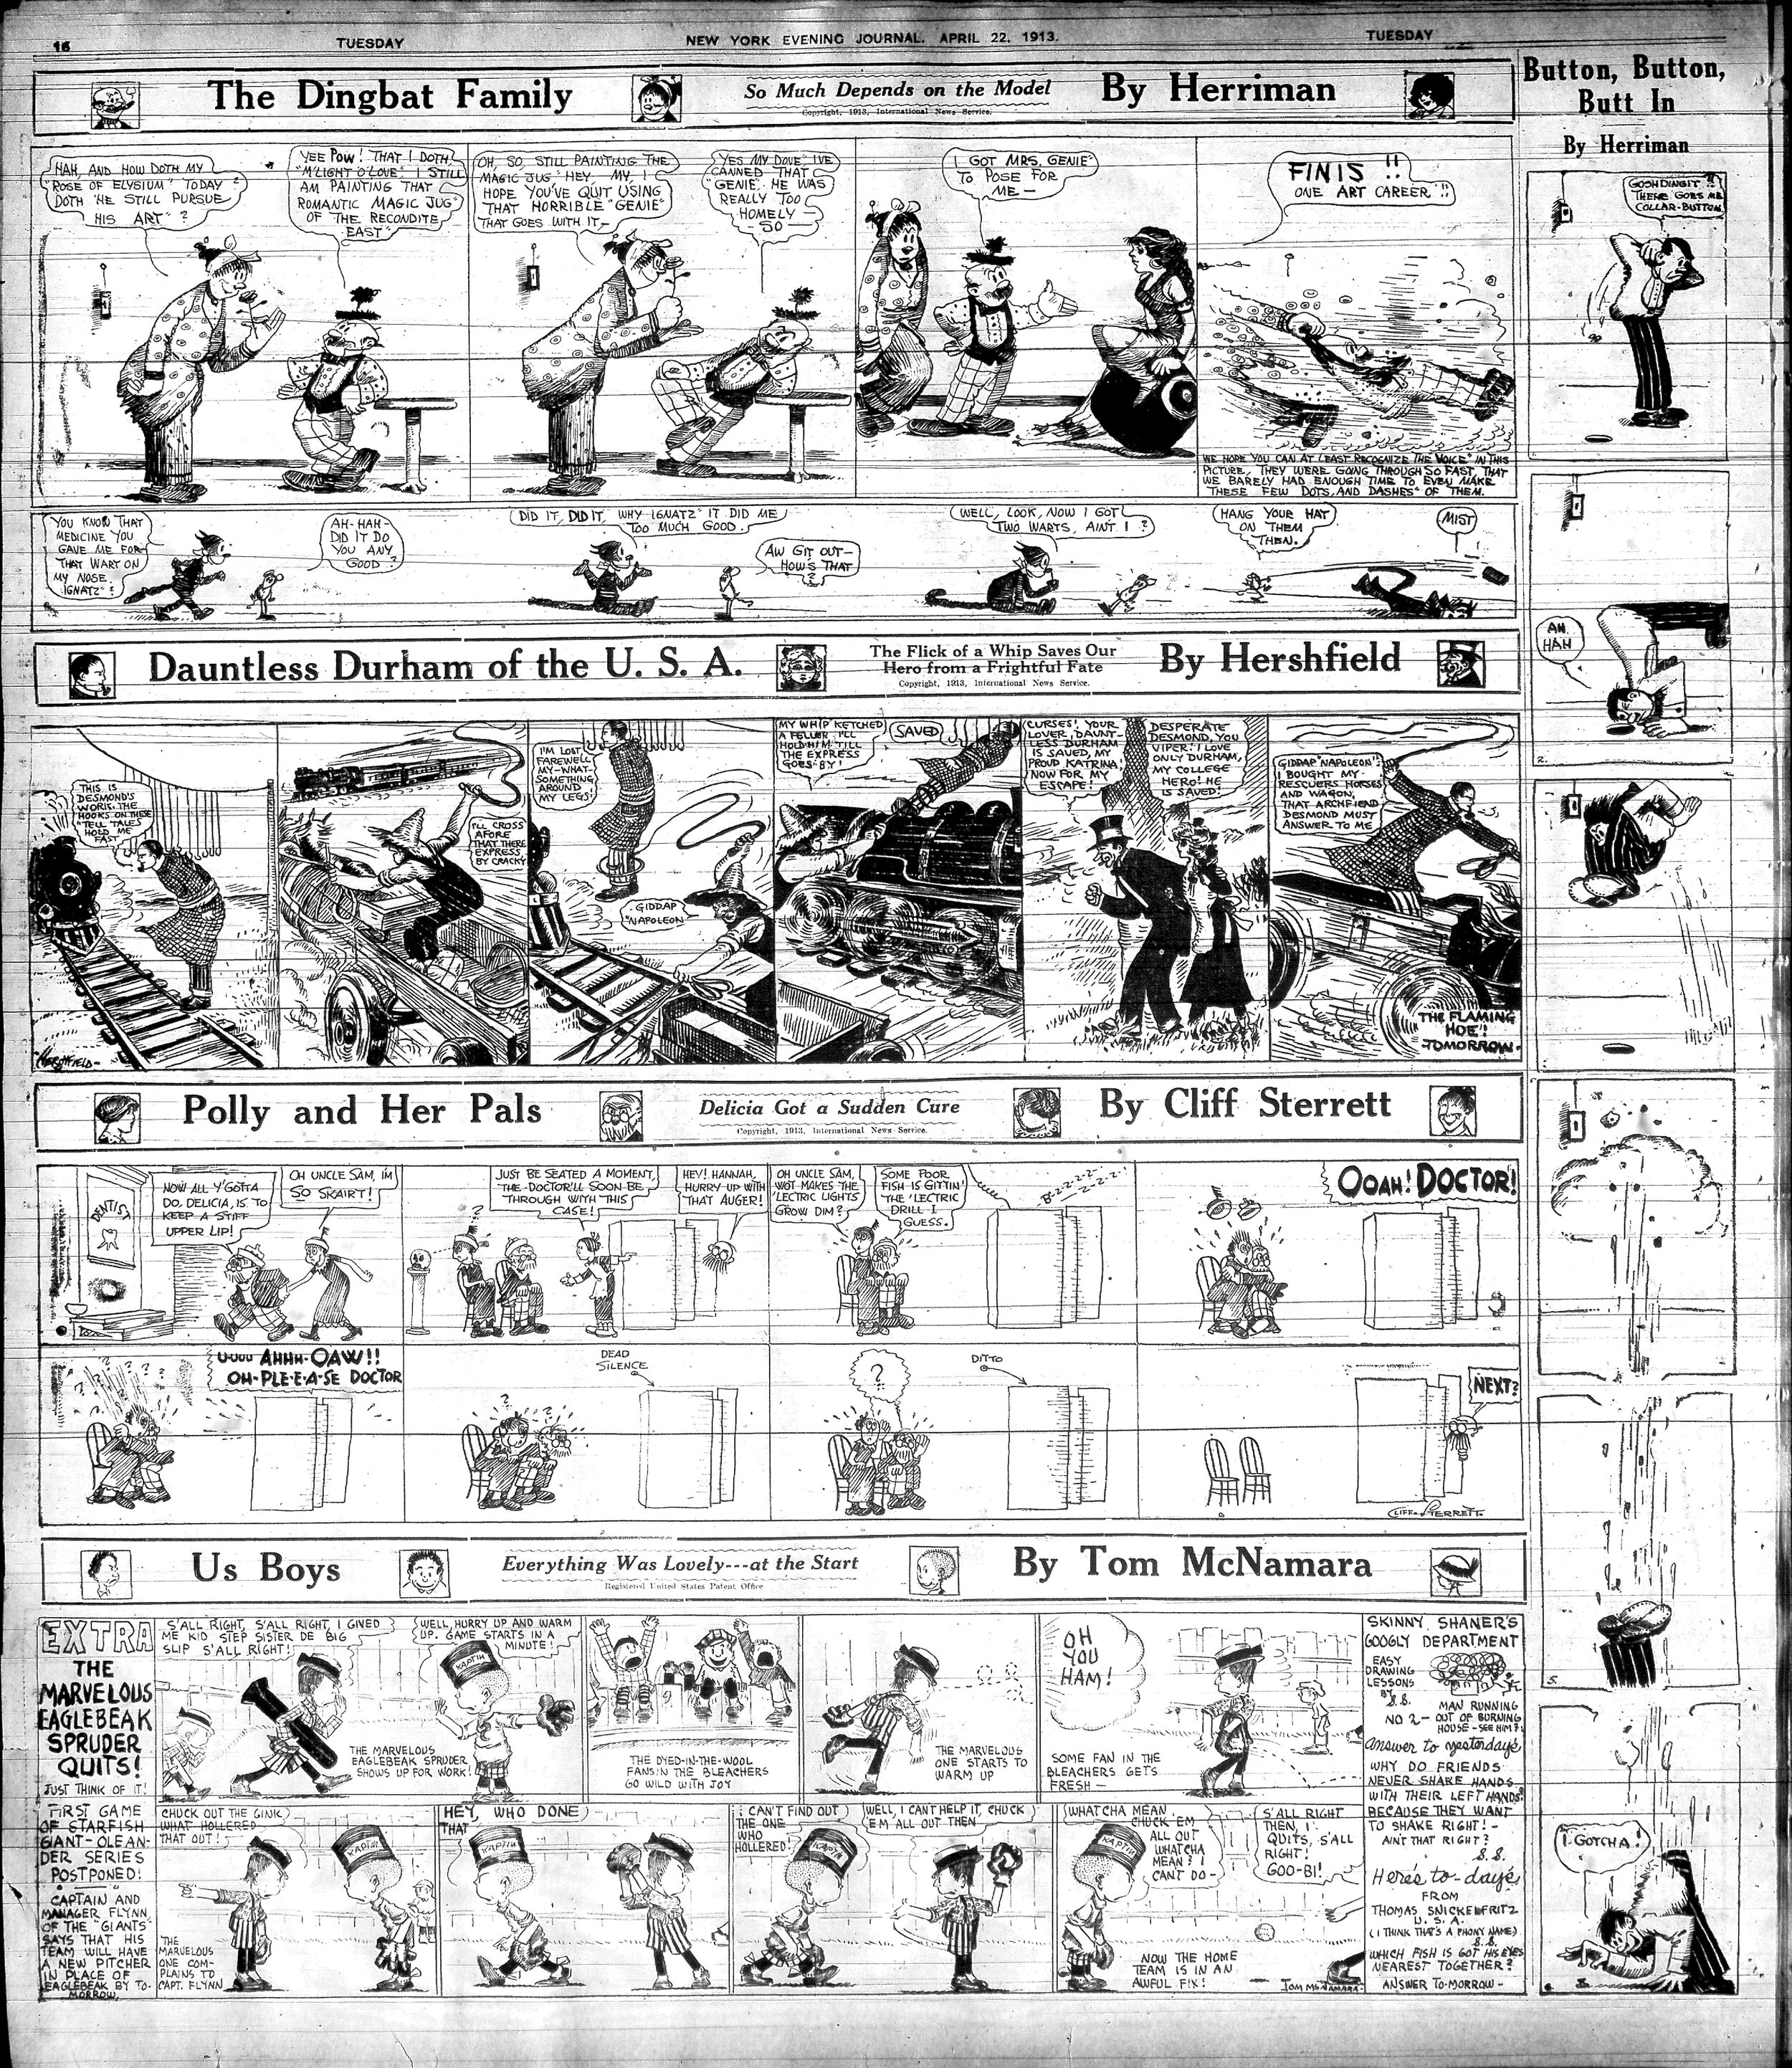 13-nyej-04-22-1913-comics-page-.jpg